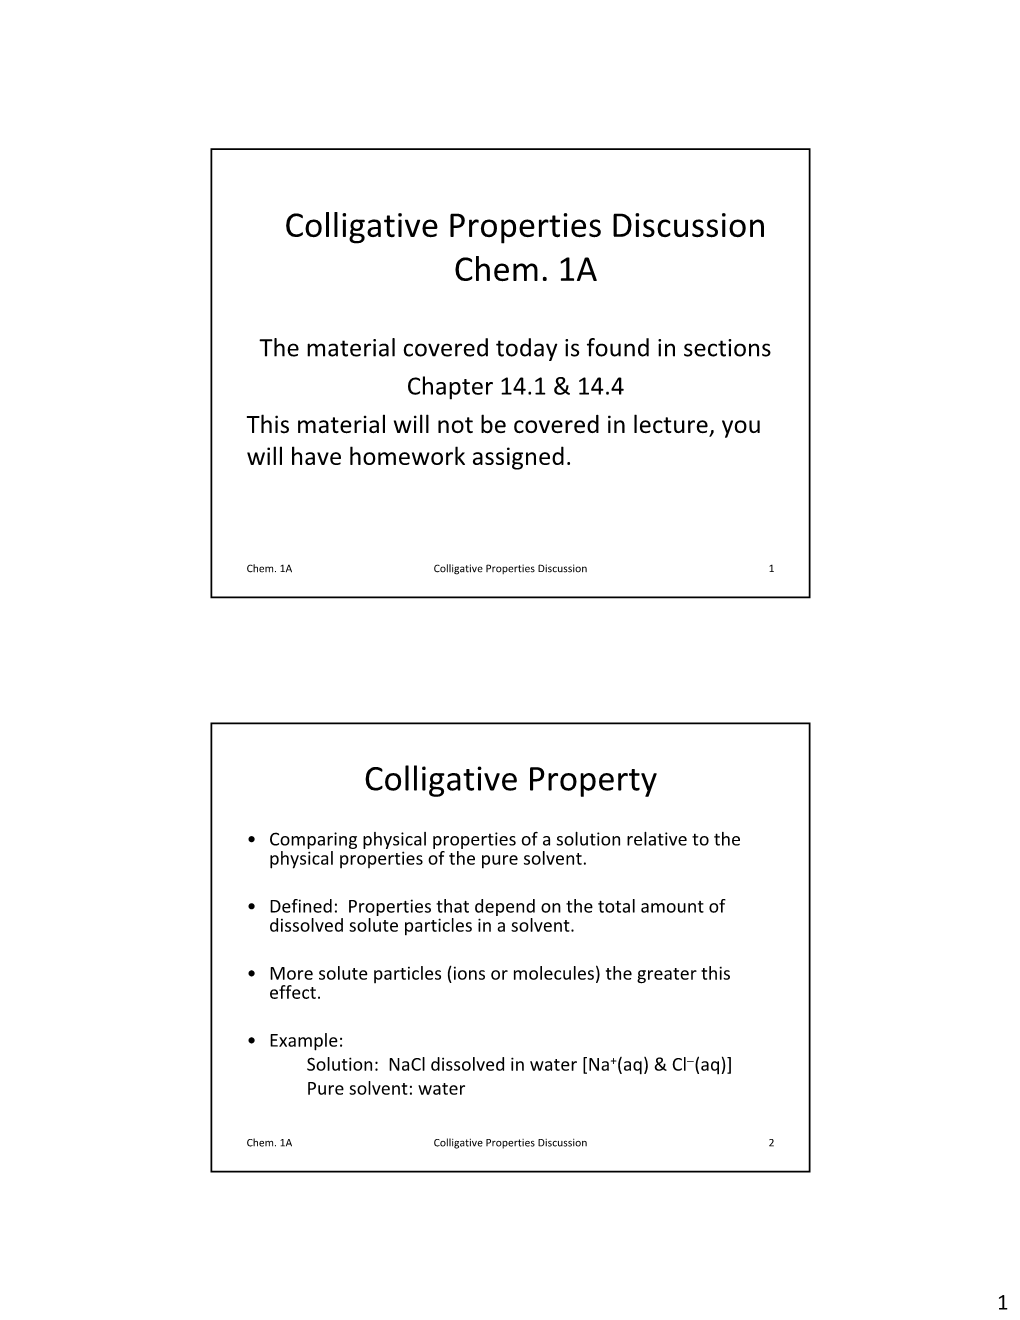 Colligative Properties Discussion Chem. 1A